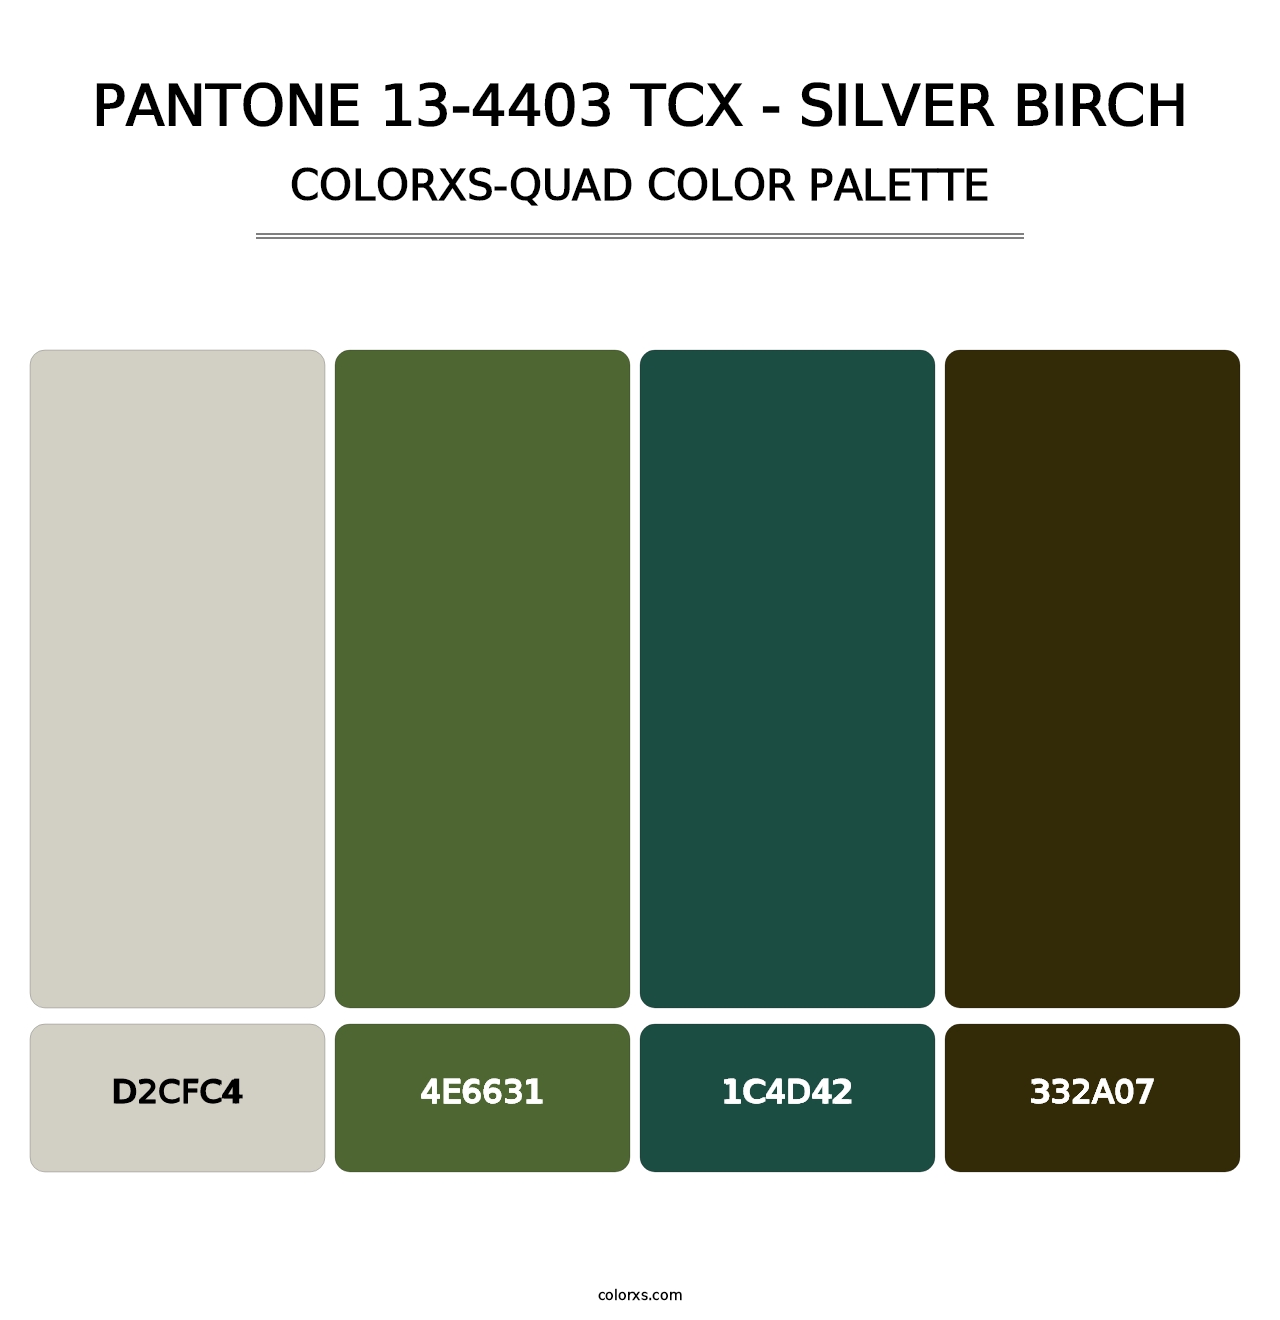 PANTONE 13-4403 TCX - Silver Birch - Colorxs Quad Palette